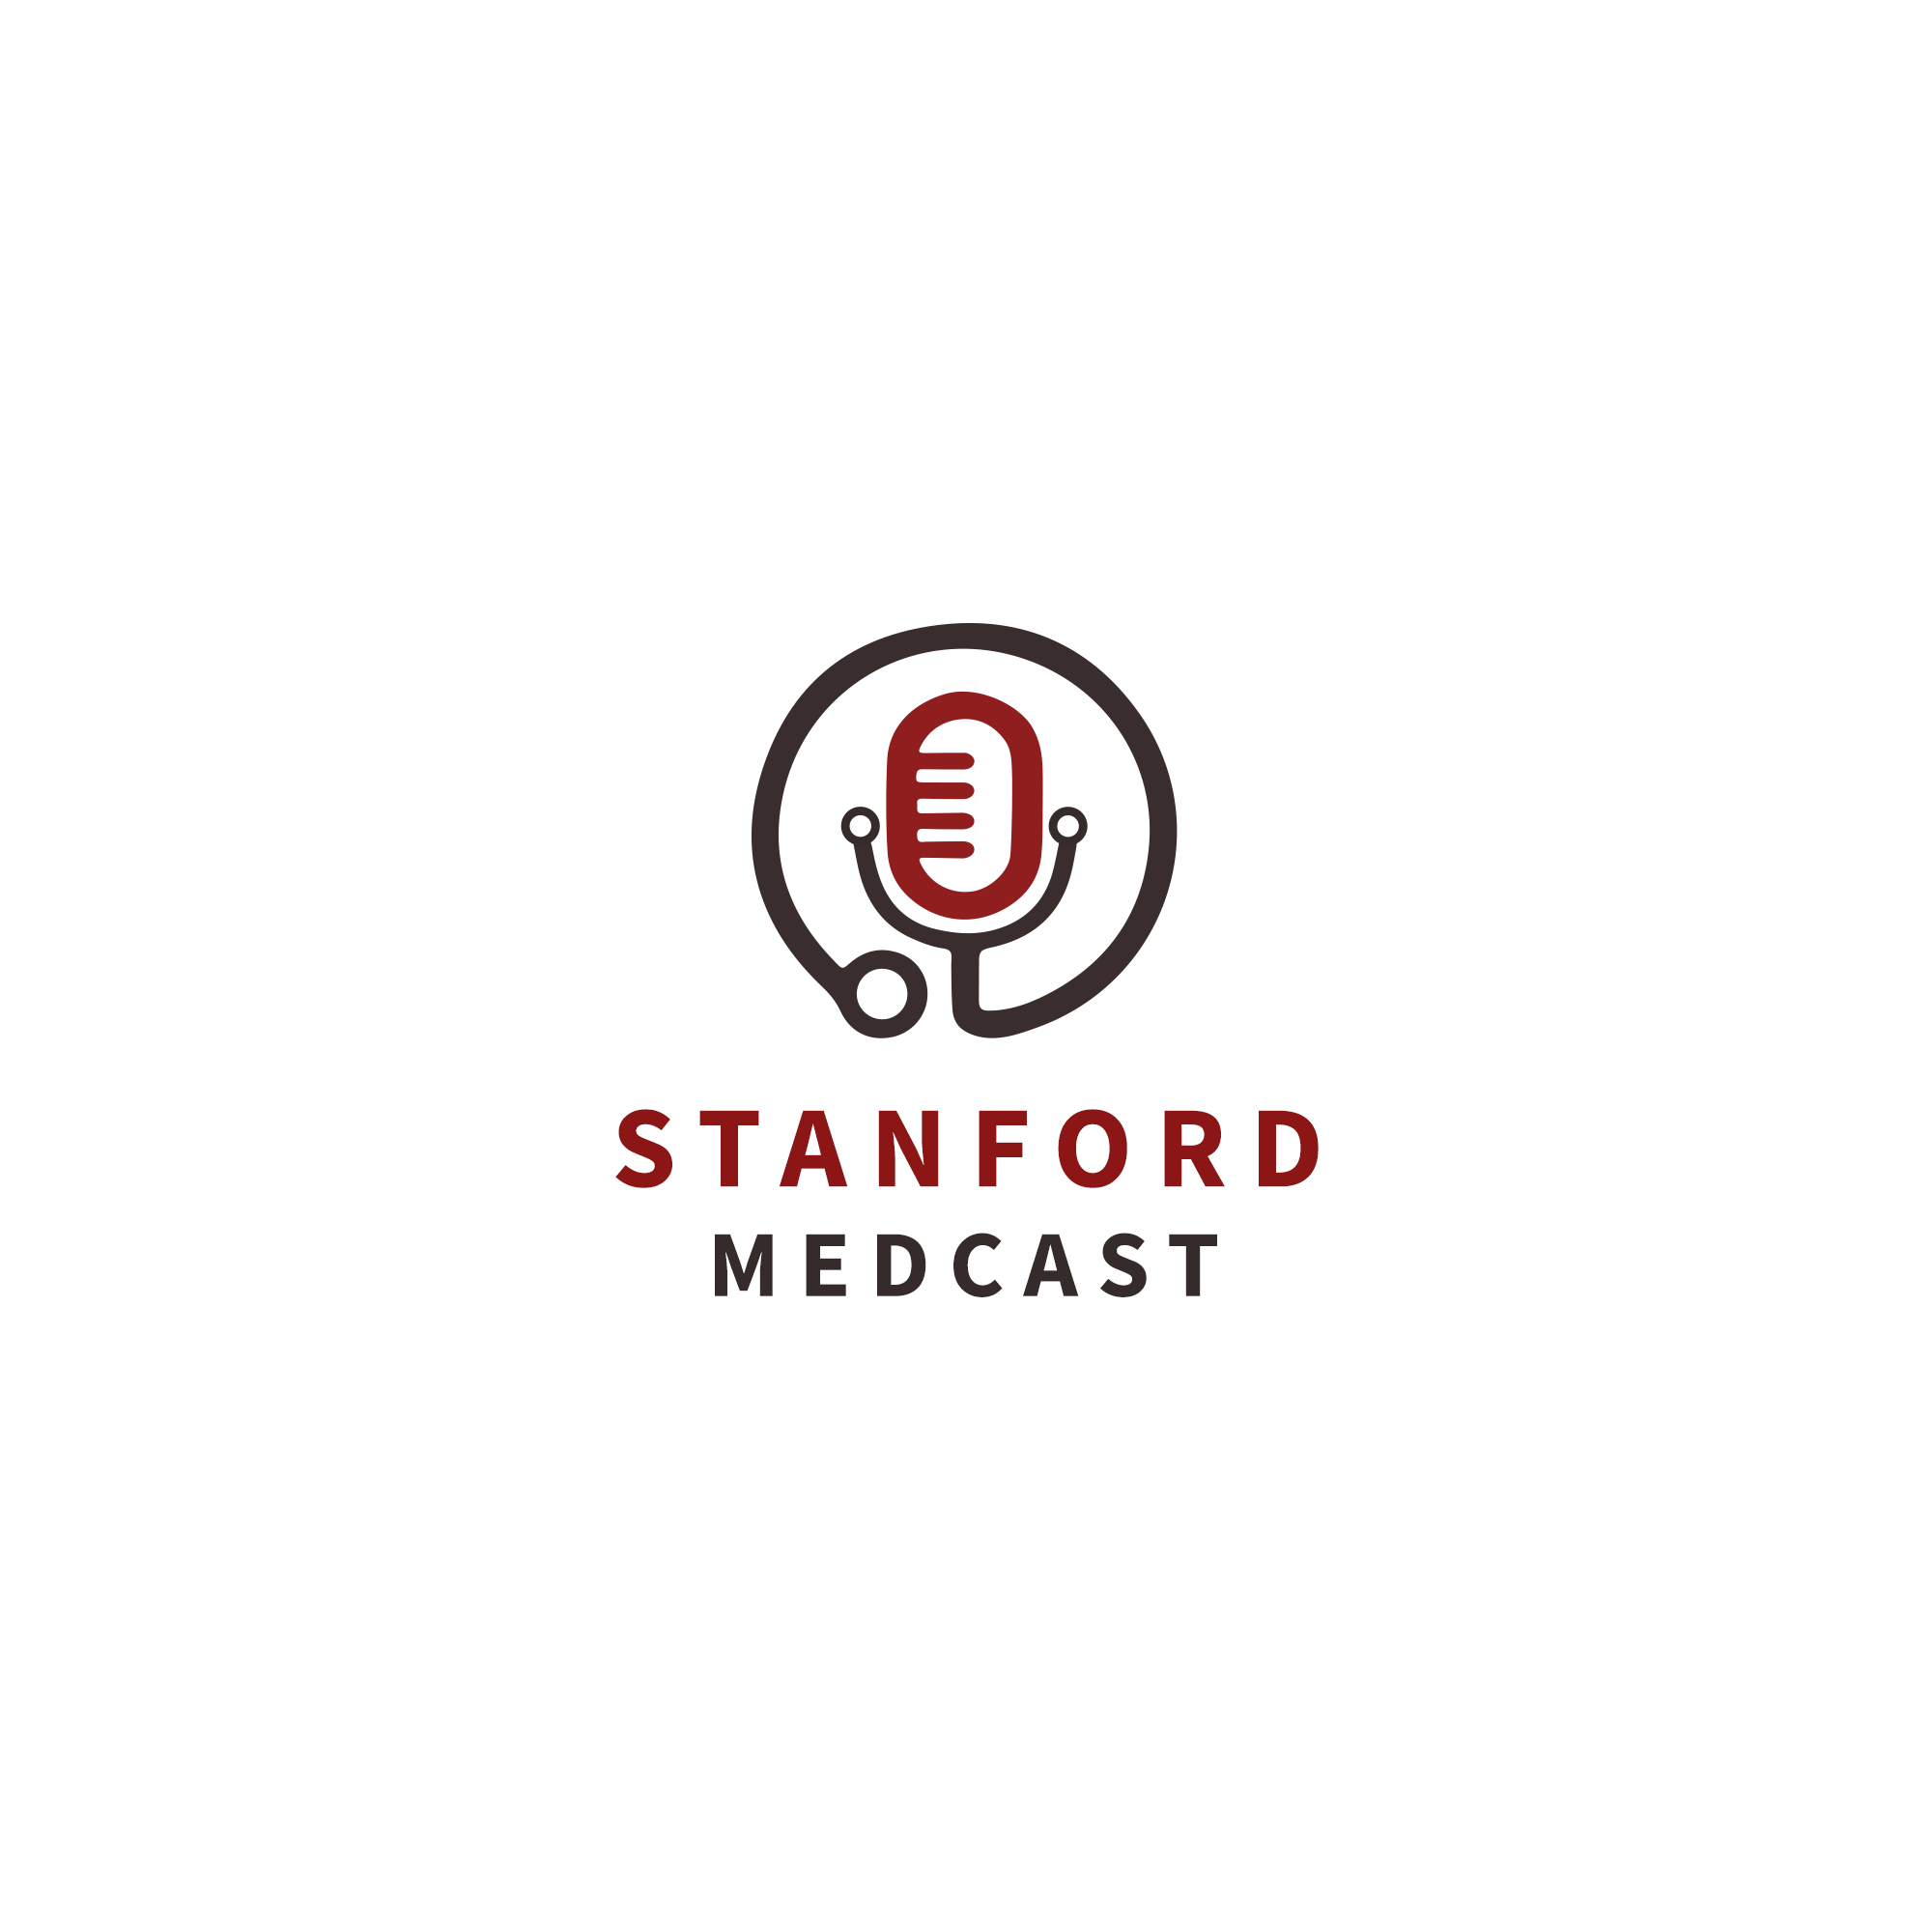 Stanford Medcast Episode 68: Hot Topics Mini-Series - ChatGPT